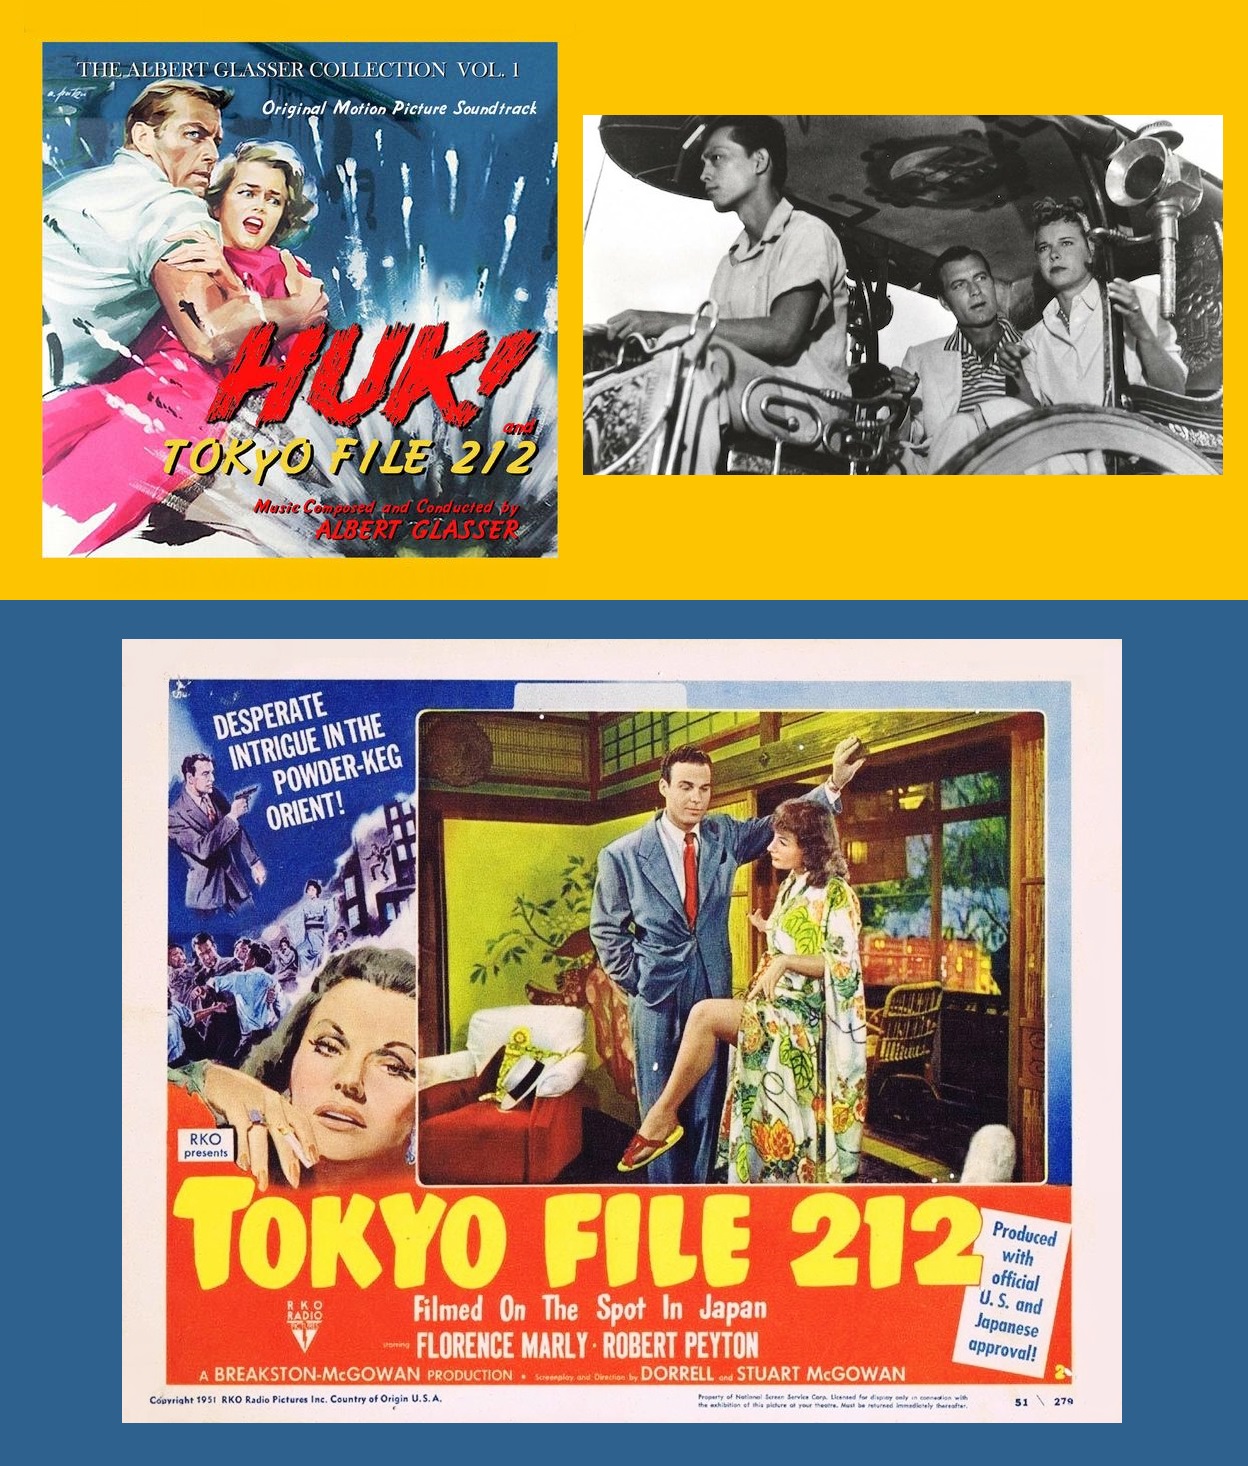 L'Armada sauvage (Huk!) et Tokyo dossier 212 (Tokyo File 212) (Digital)